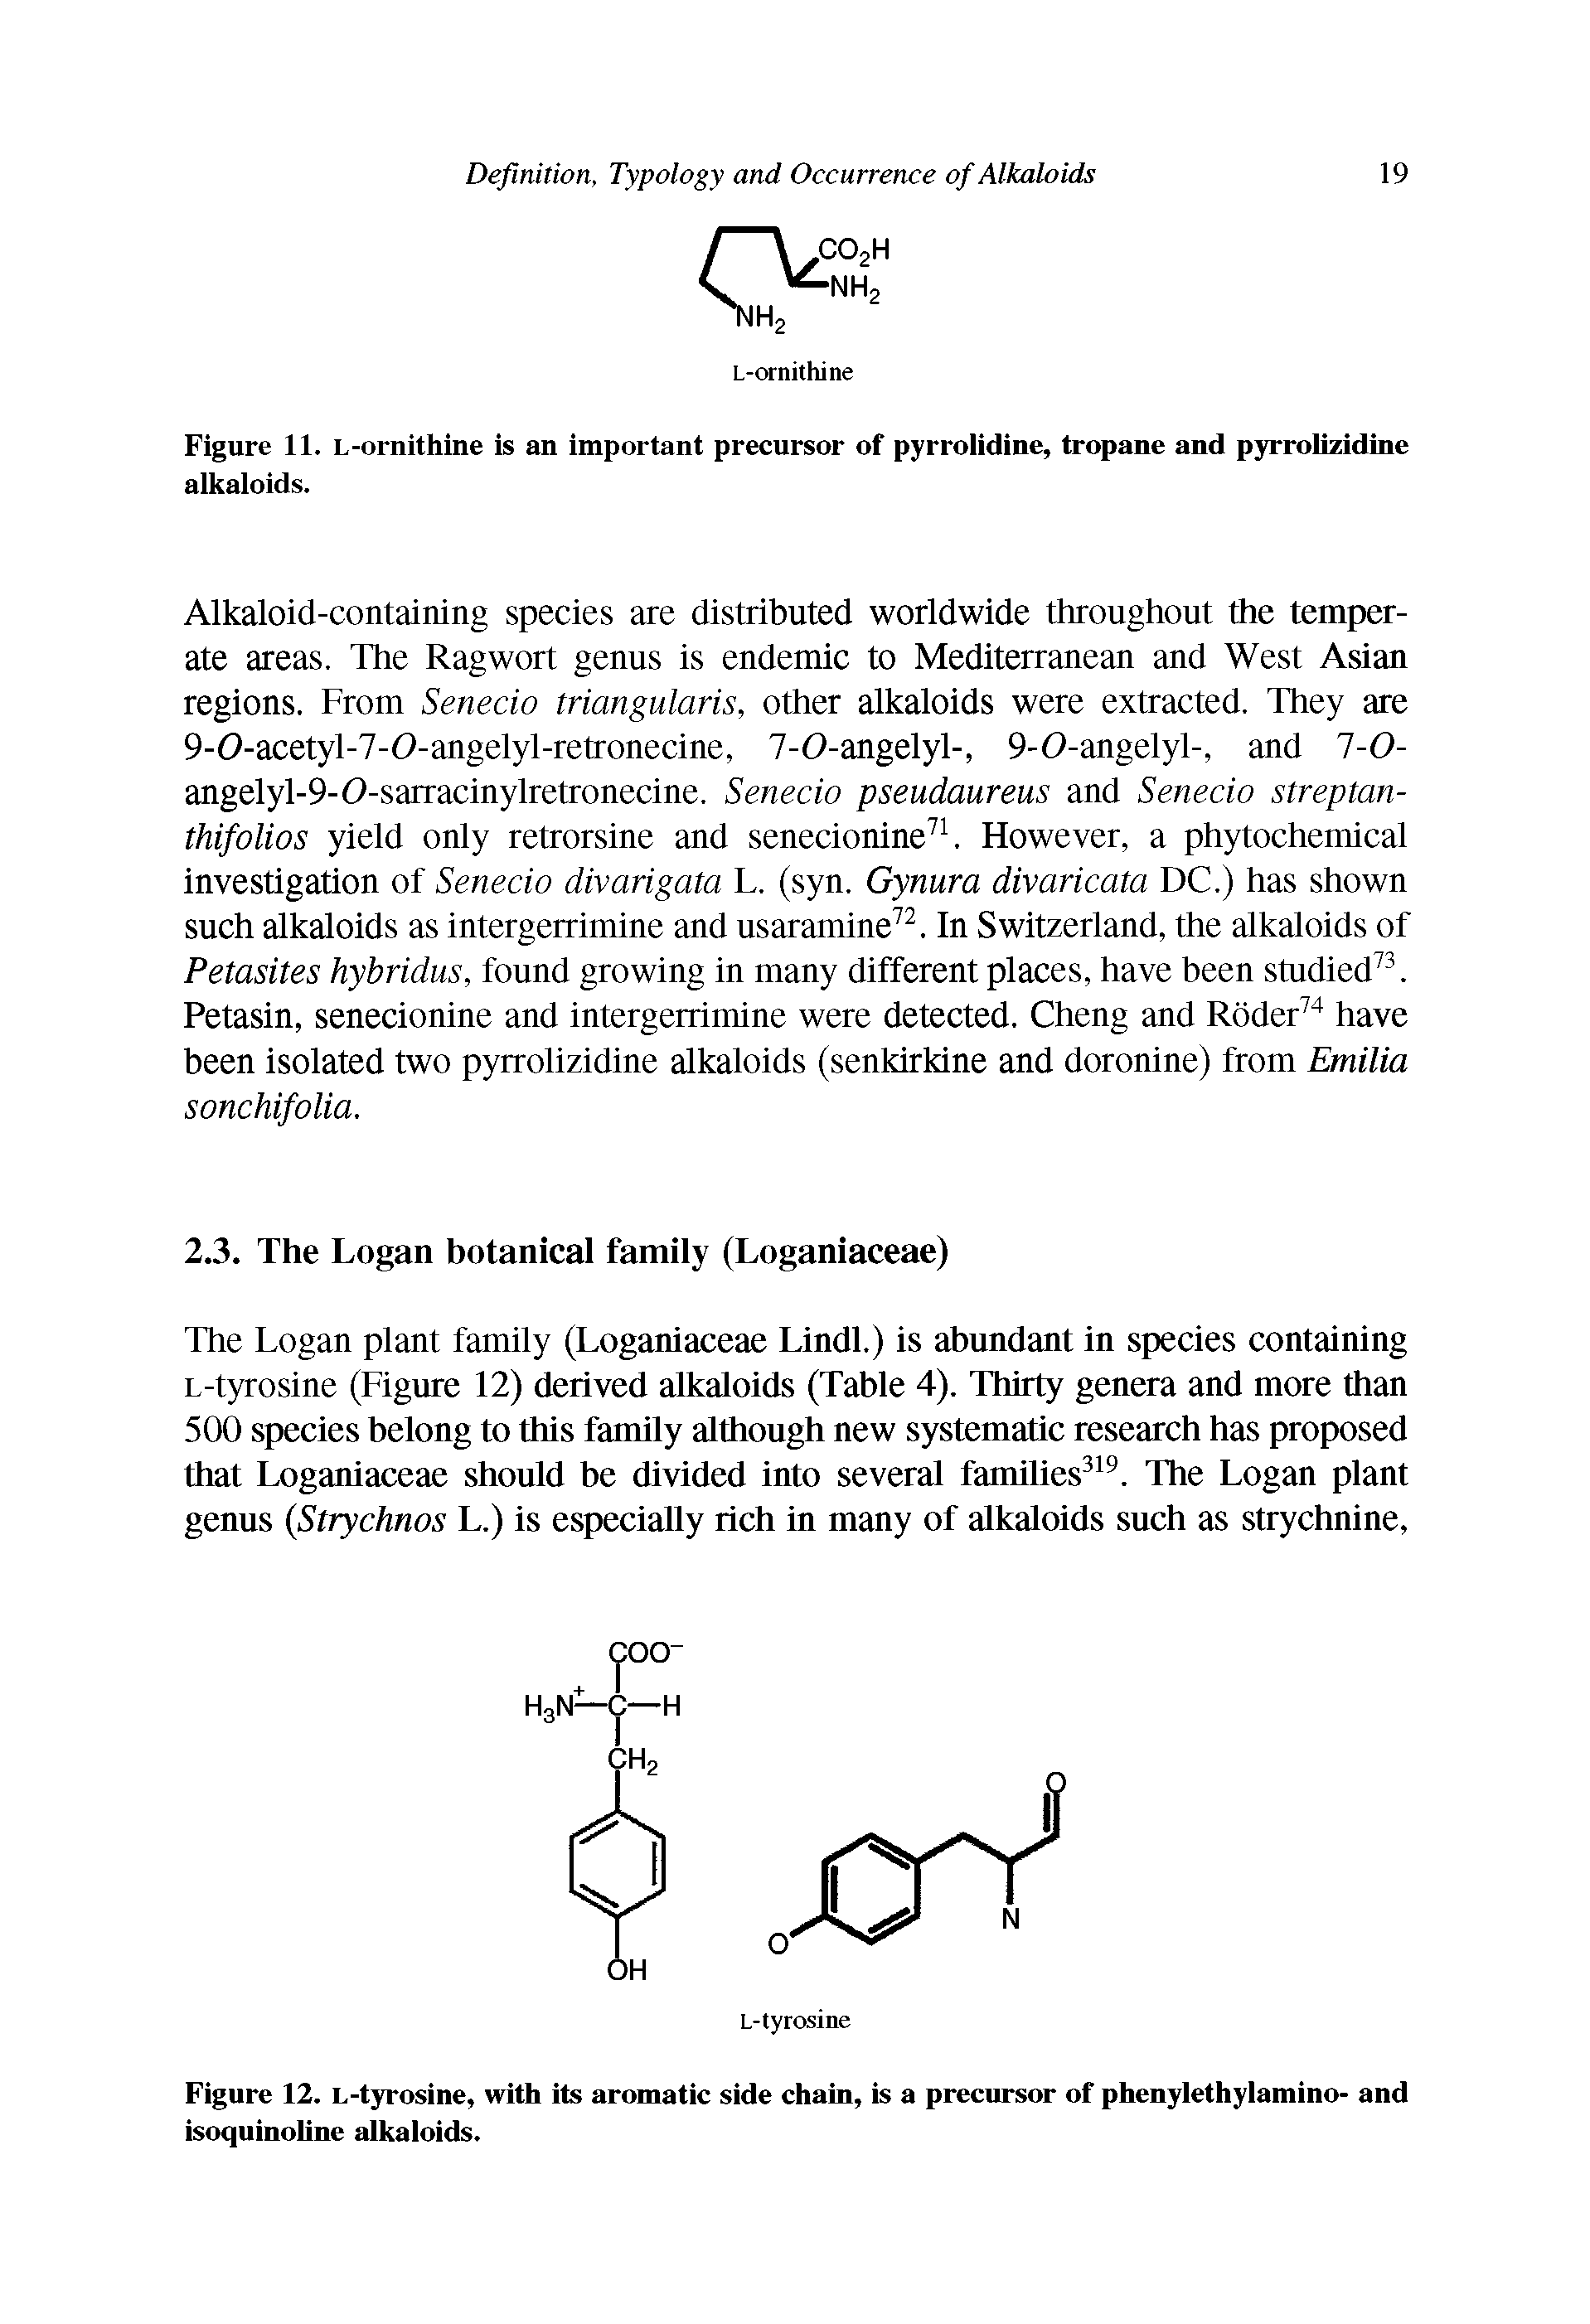 Figure 11. L-ornithine is an important precursor of pyrrolidine, tropane and pyrrolizidine alkaloids.